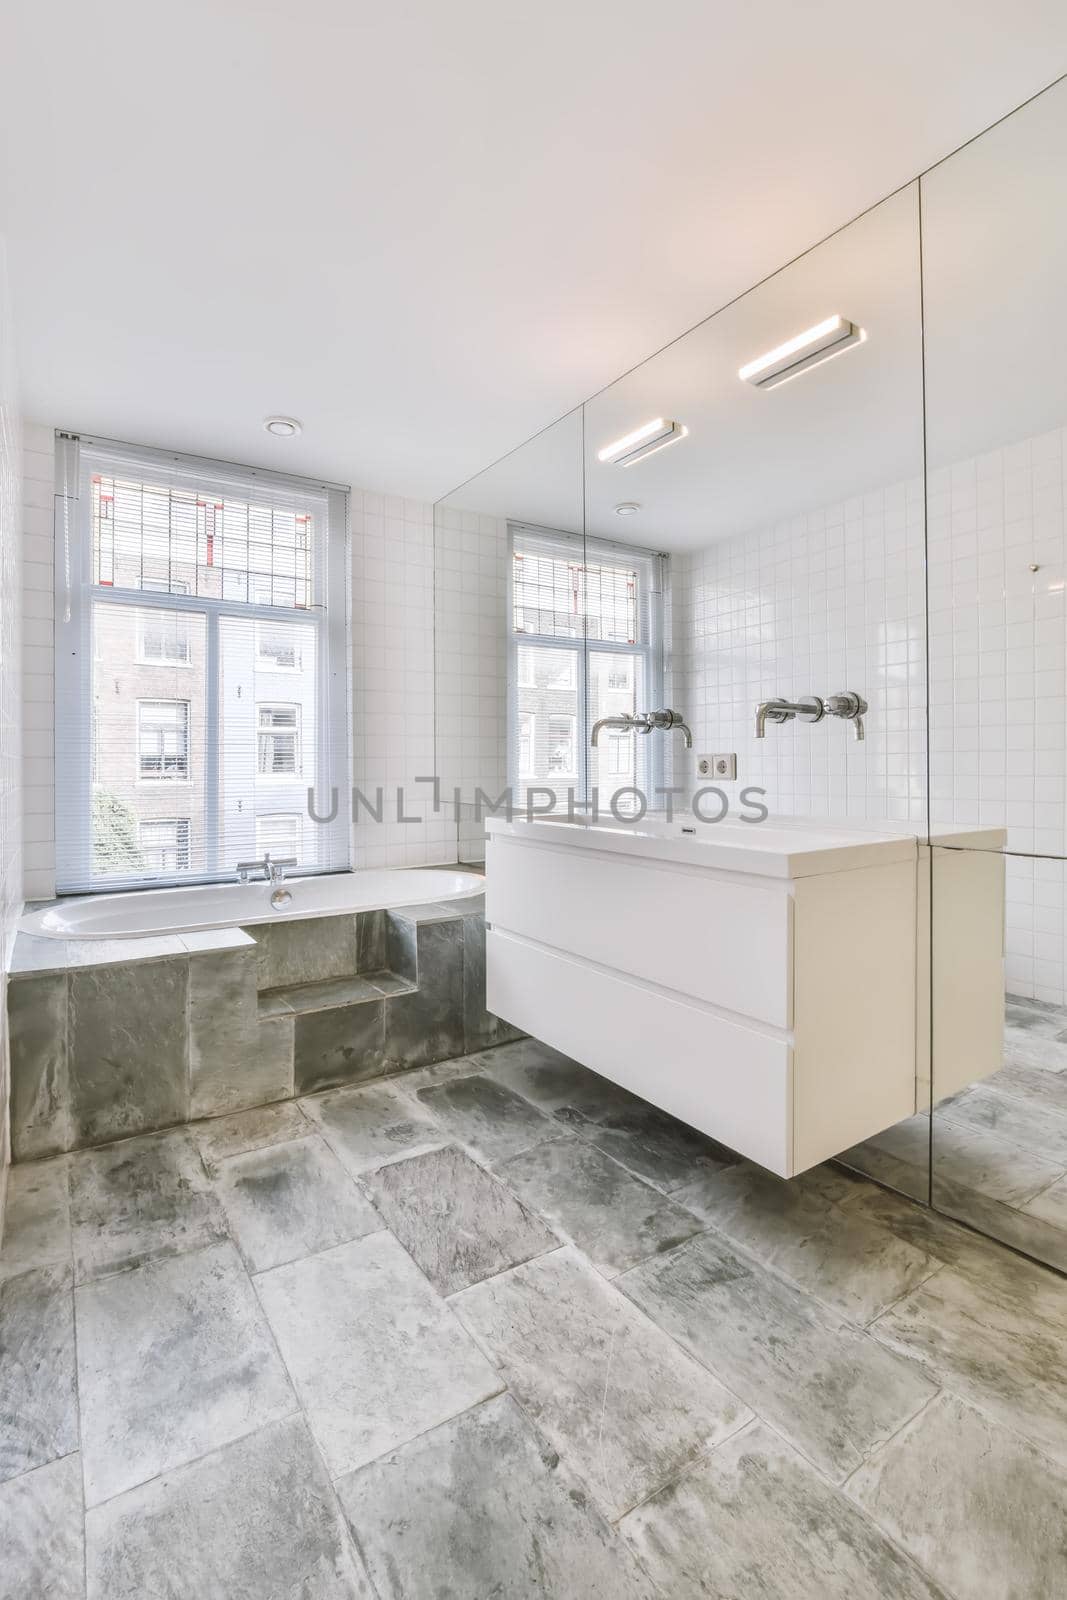 Luxurious bathroom with marble floor and bathtub by casamedia